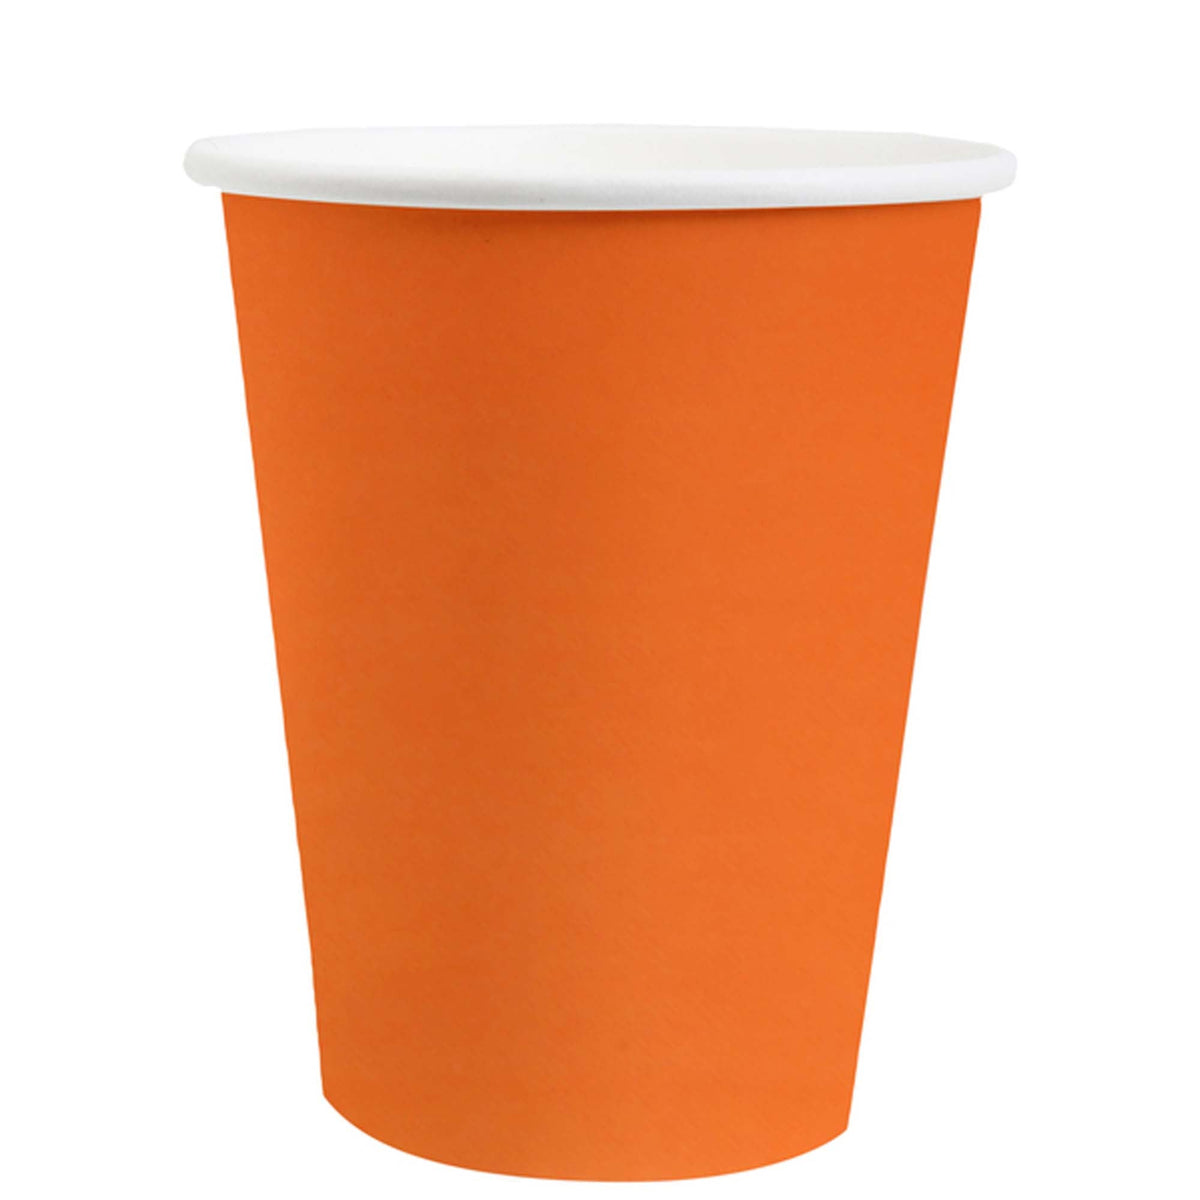 SANTEX Everyday Entertaining Orange Party Paper Cups, 9 Oz, 10 Count 3660380072928